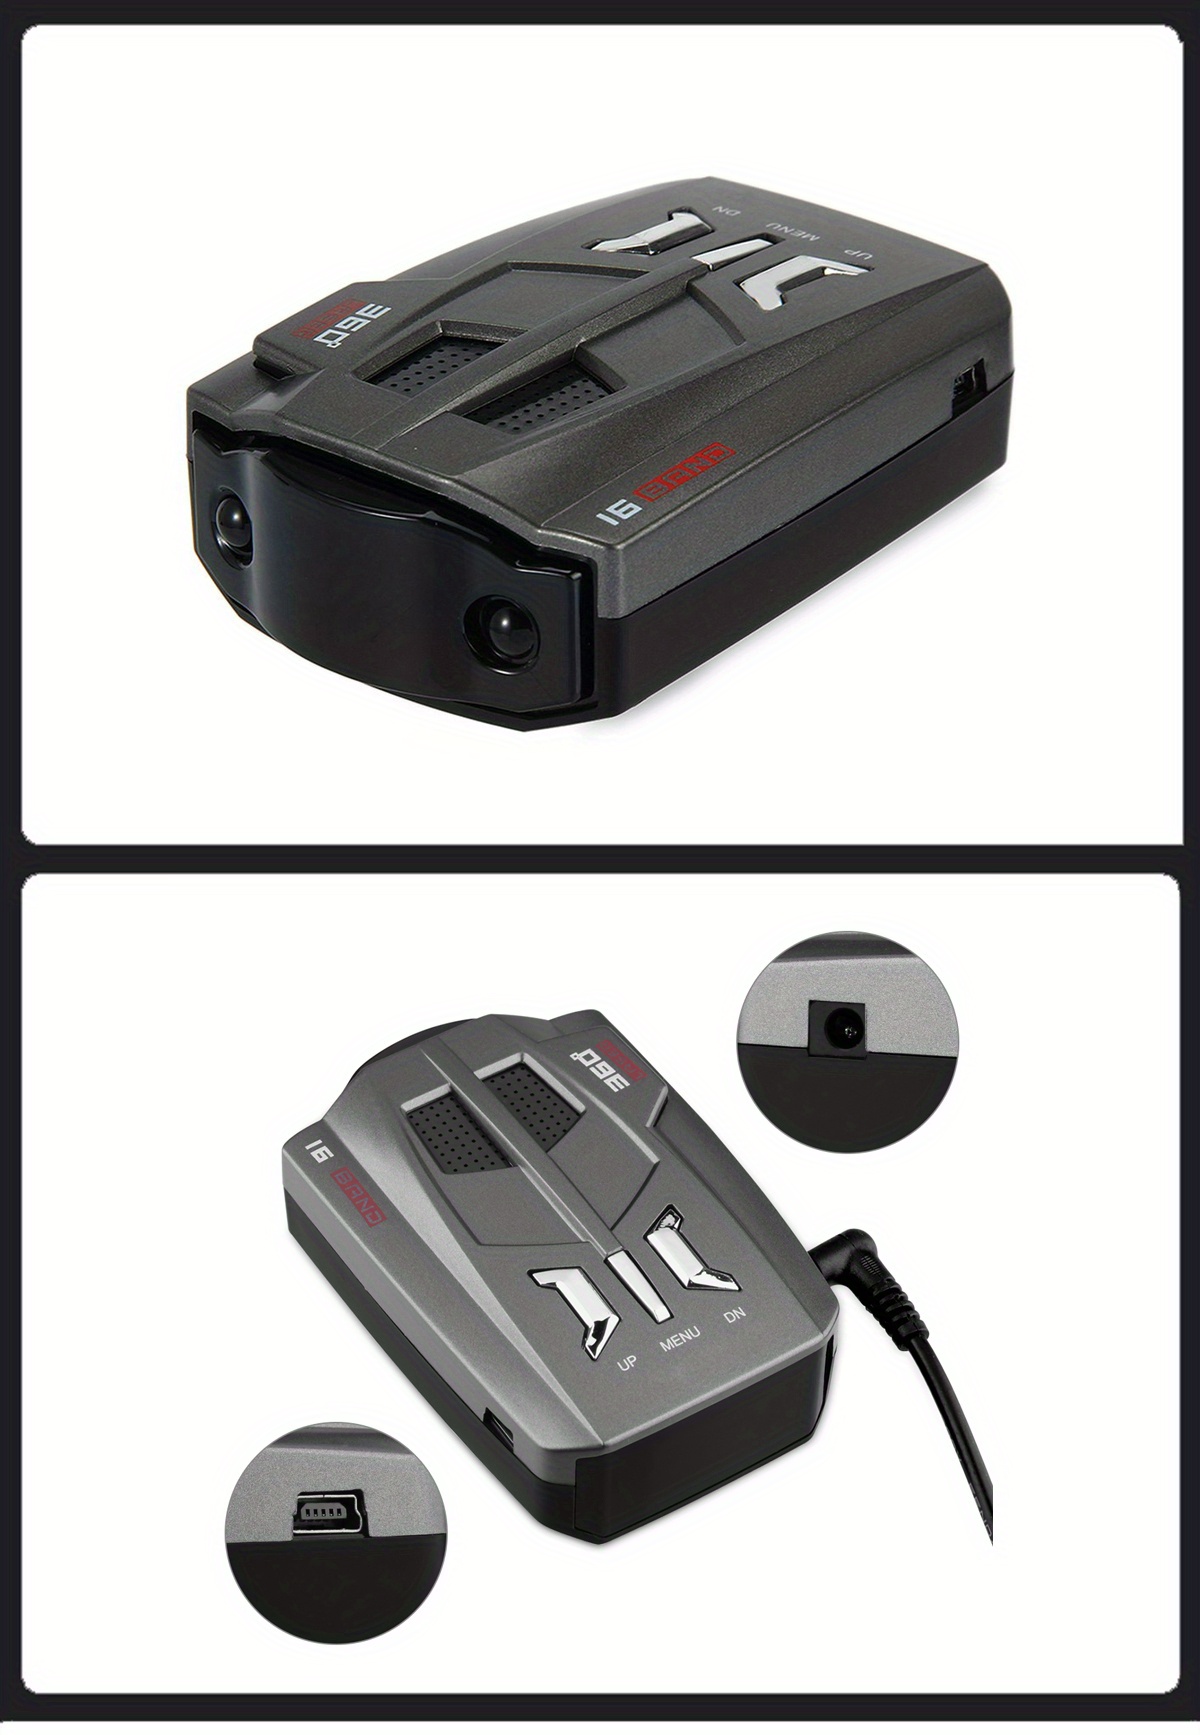 v9 speed detector ultimate car radar detector with voice prompt led display 360 detection details 8